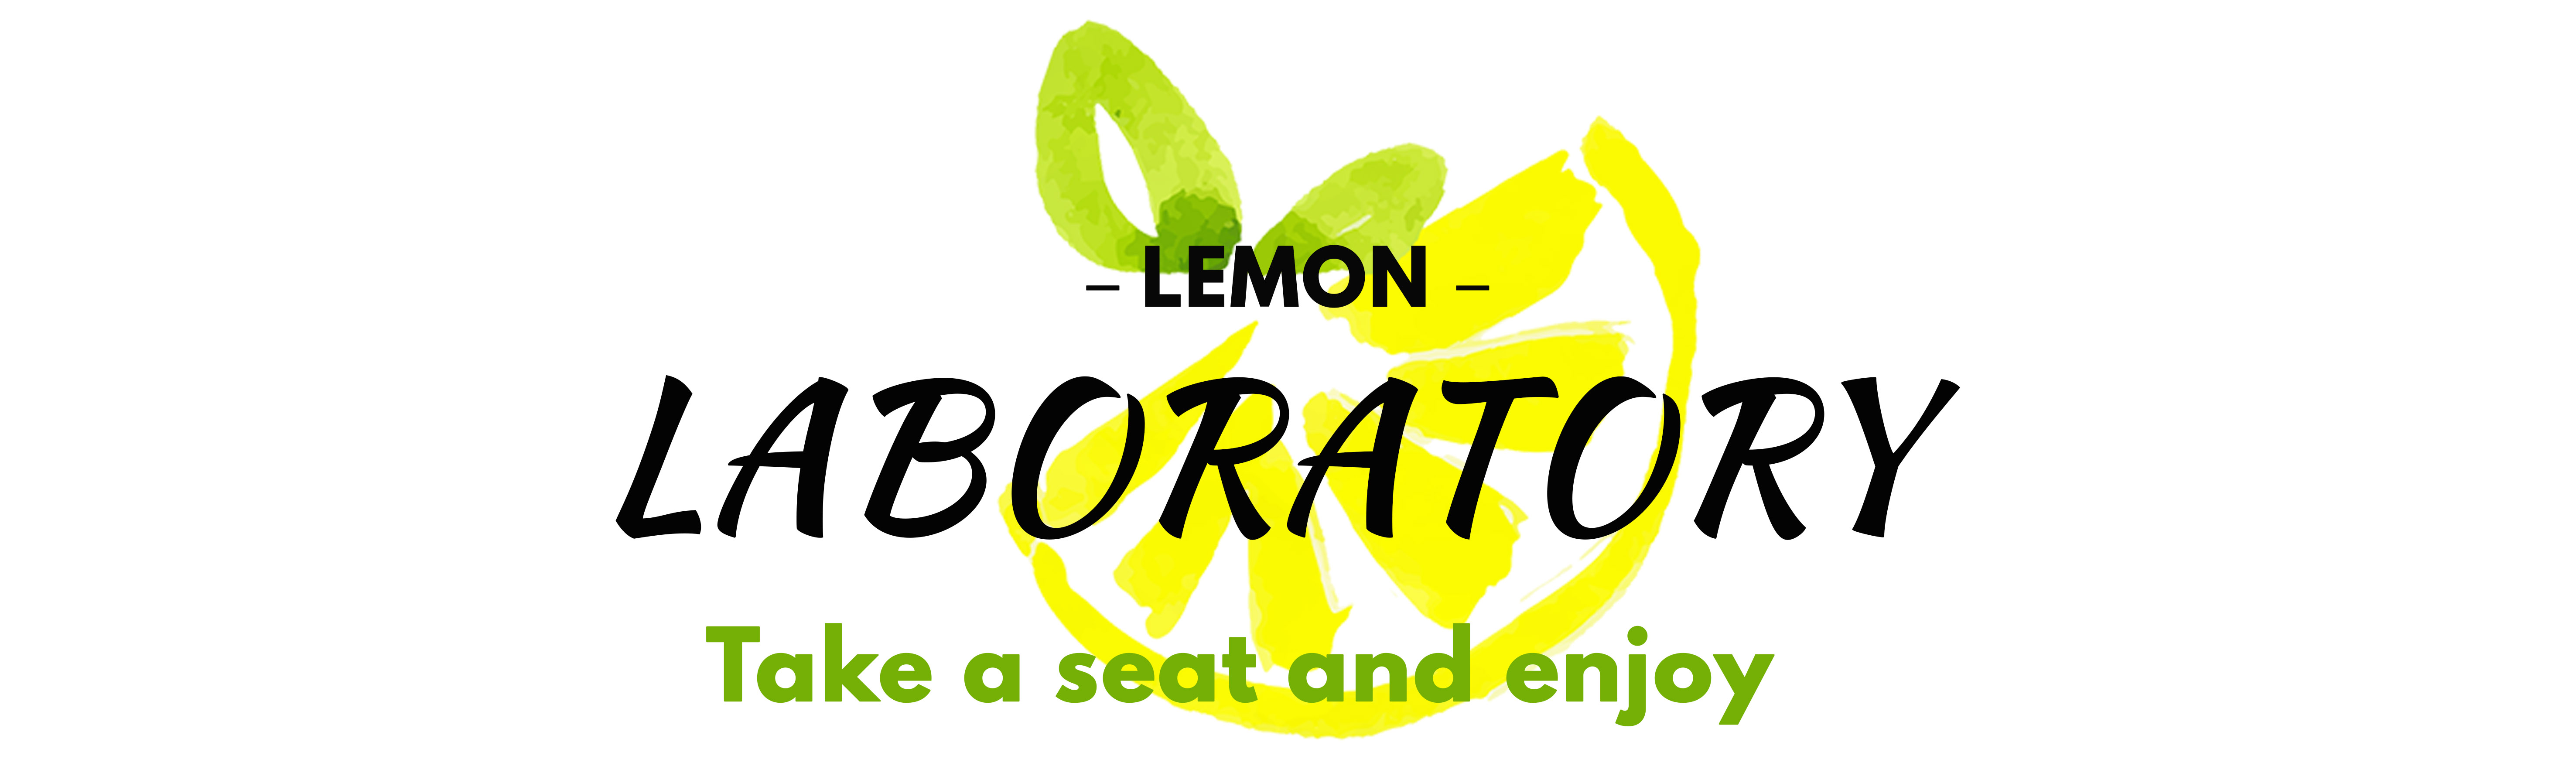 Lemon Laboratory